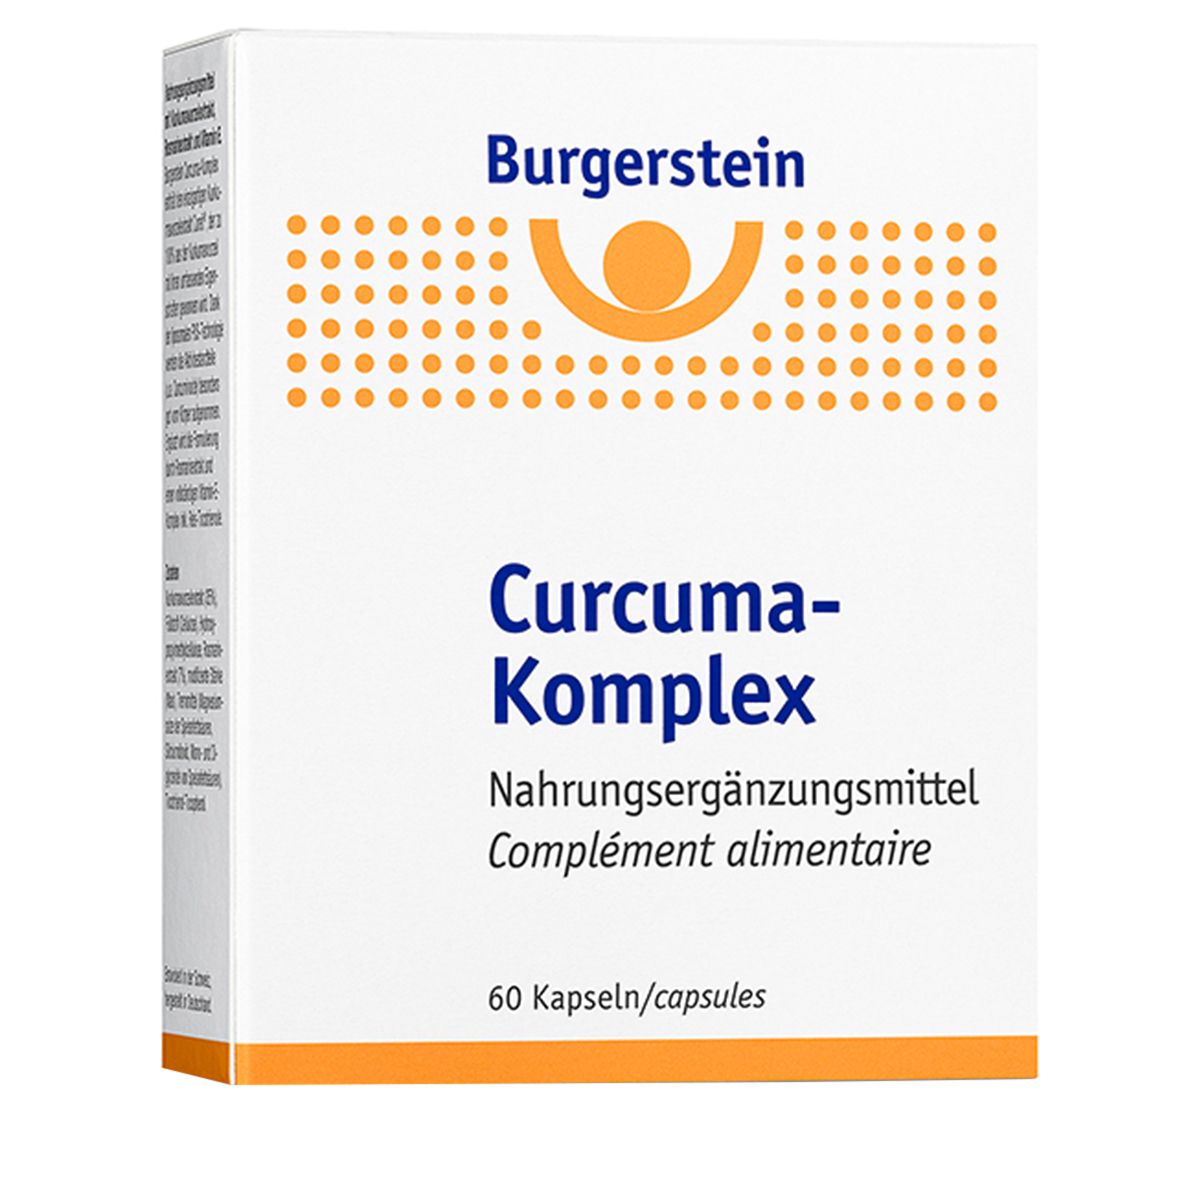 BURGERSTEIN Curcuma-Komplex, image principale